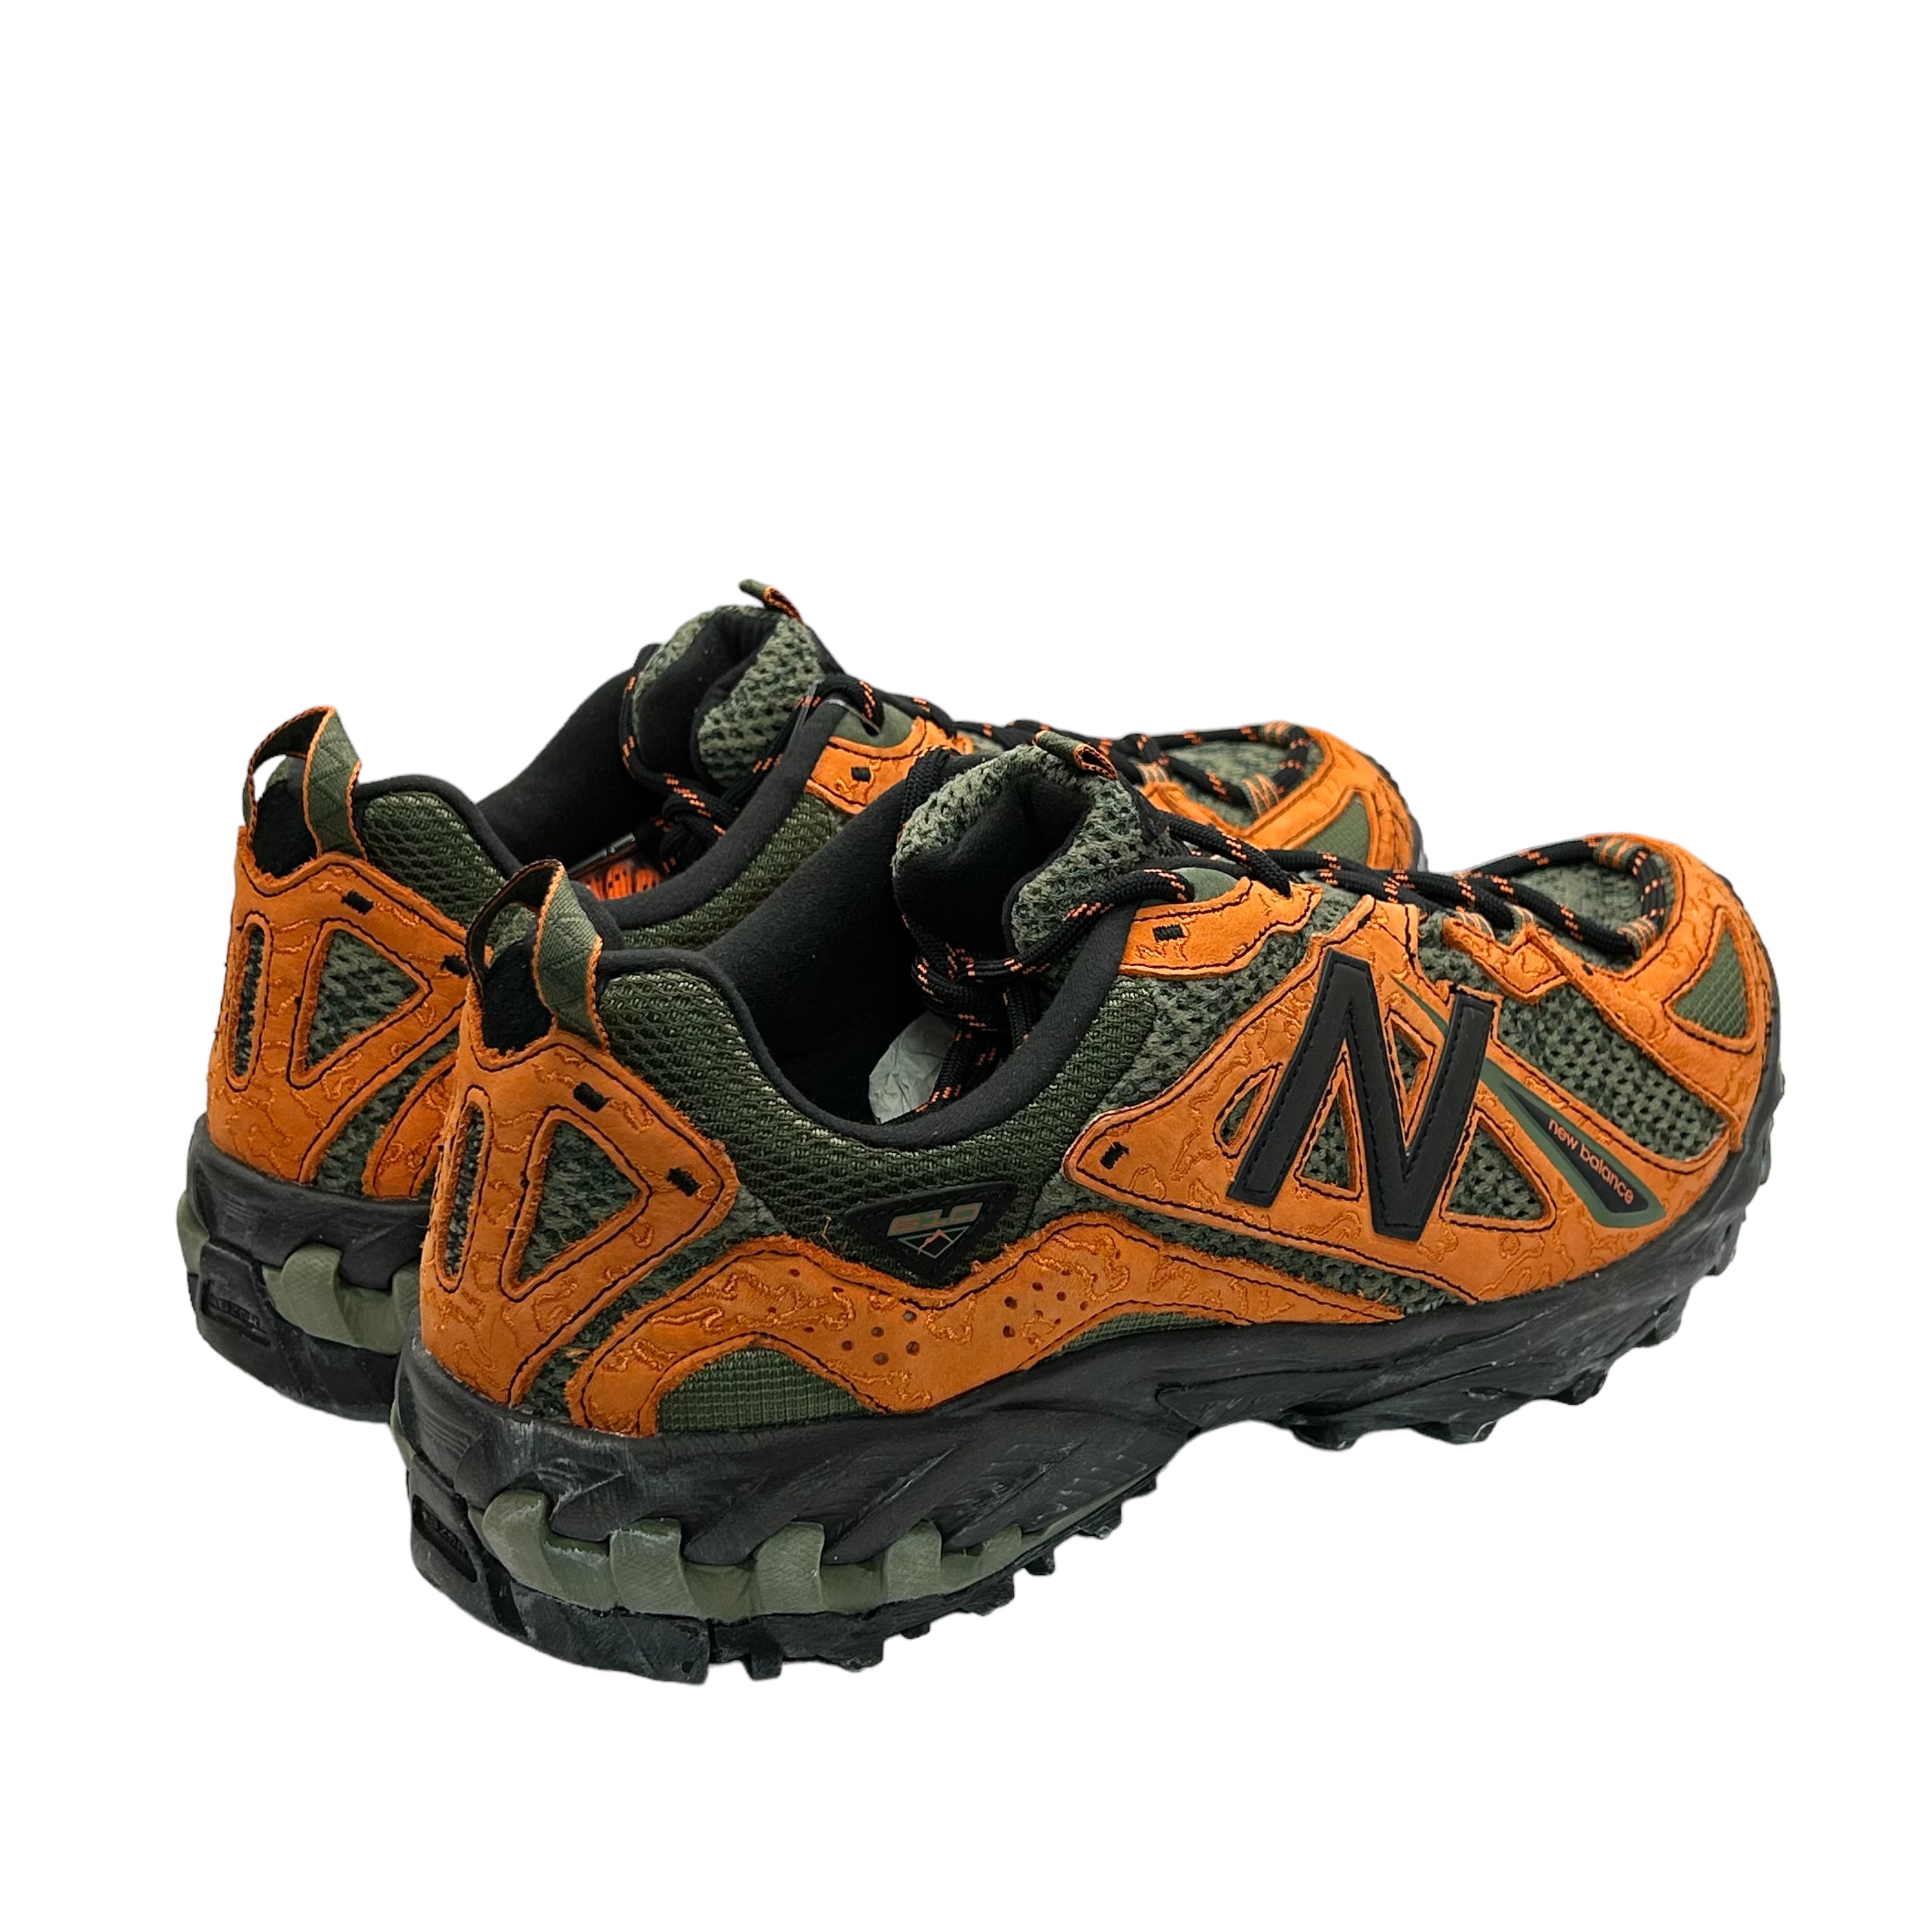 JFG x NB 610 “Lil Swamps” Hiking Shoe - 6